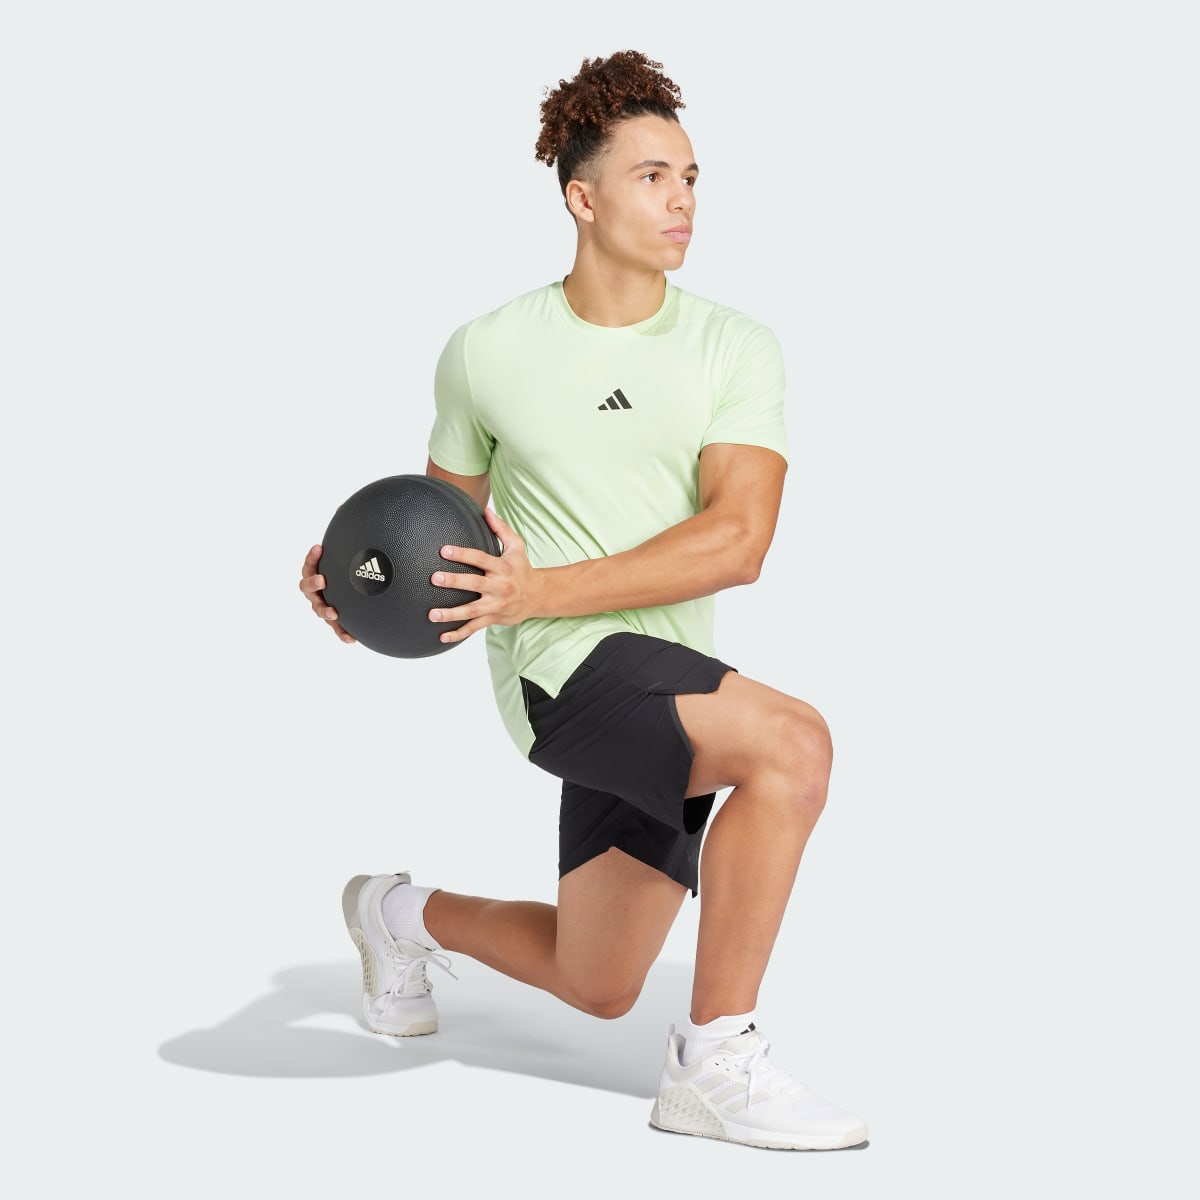 Adidas T-shirt Designed for Training Workout. 4